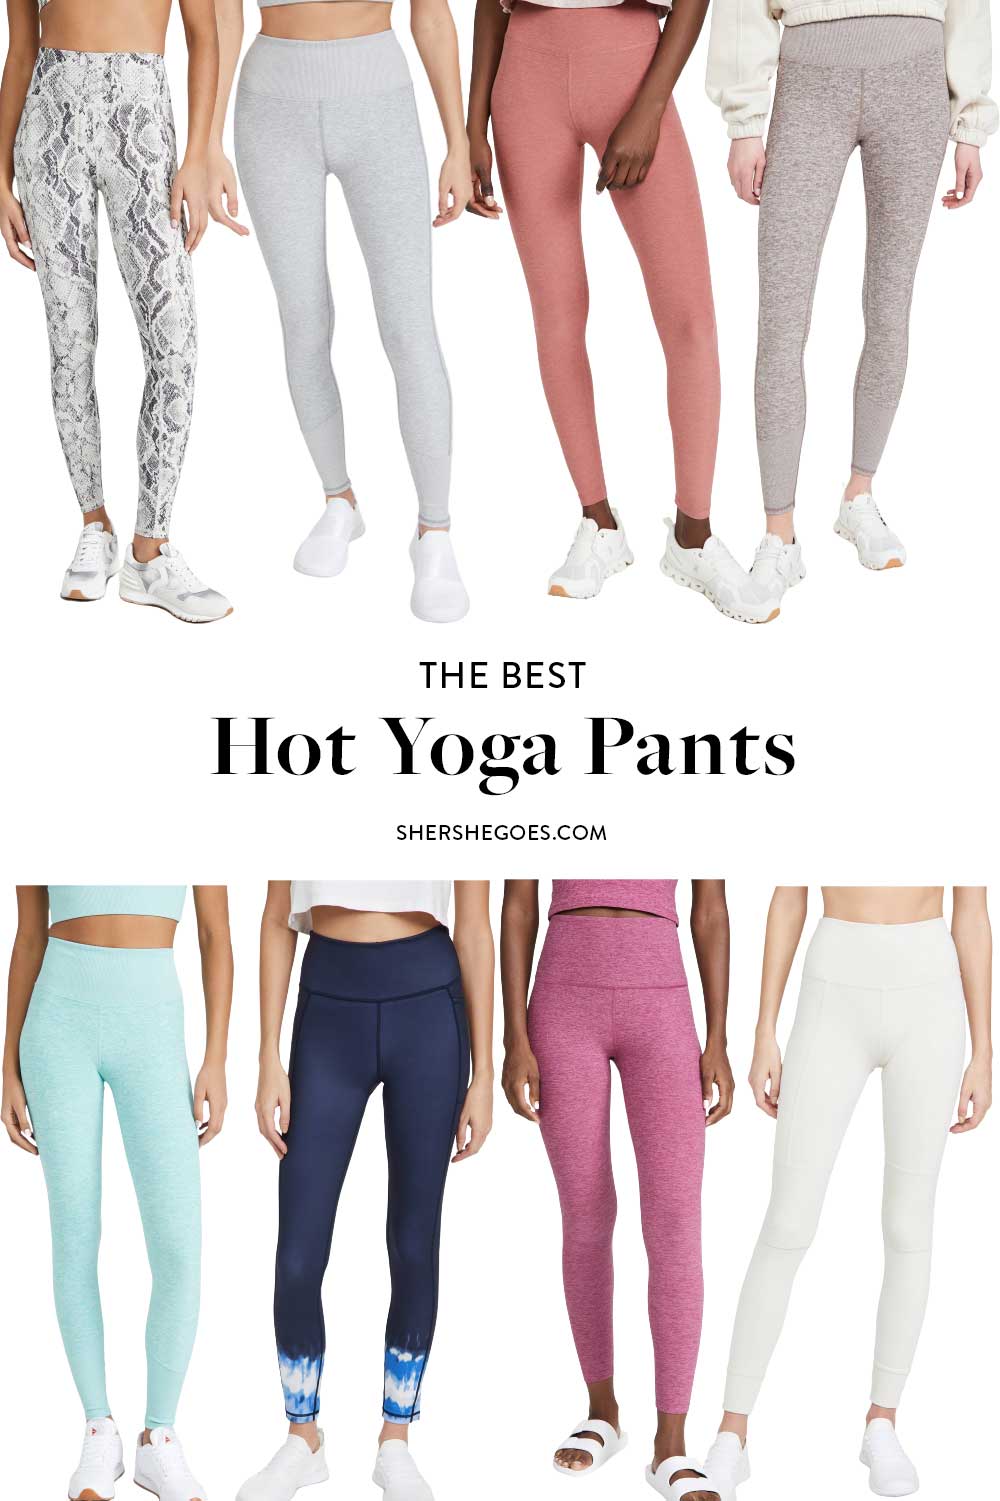 42 Hot Girls Wearing Yoga Pants HighRes Pics